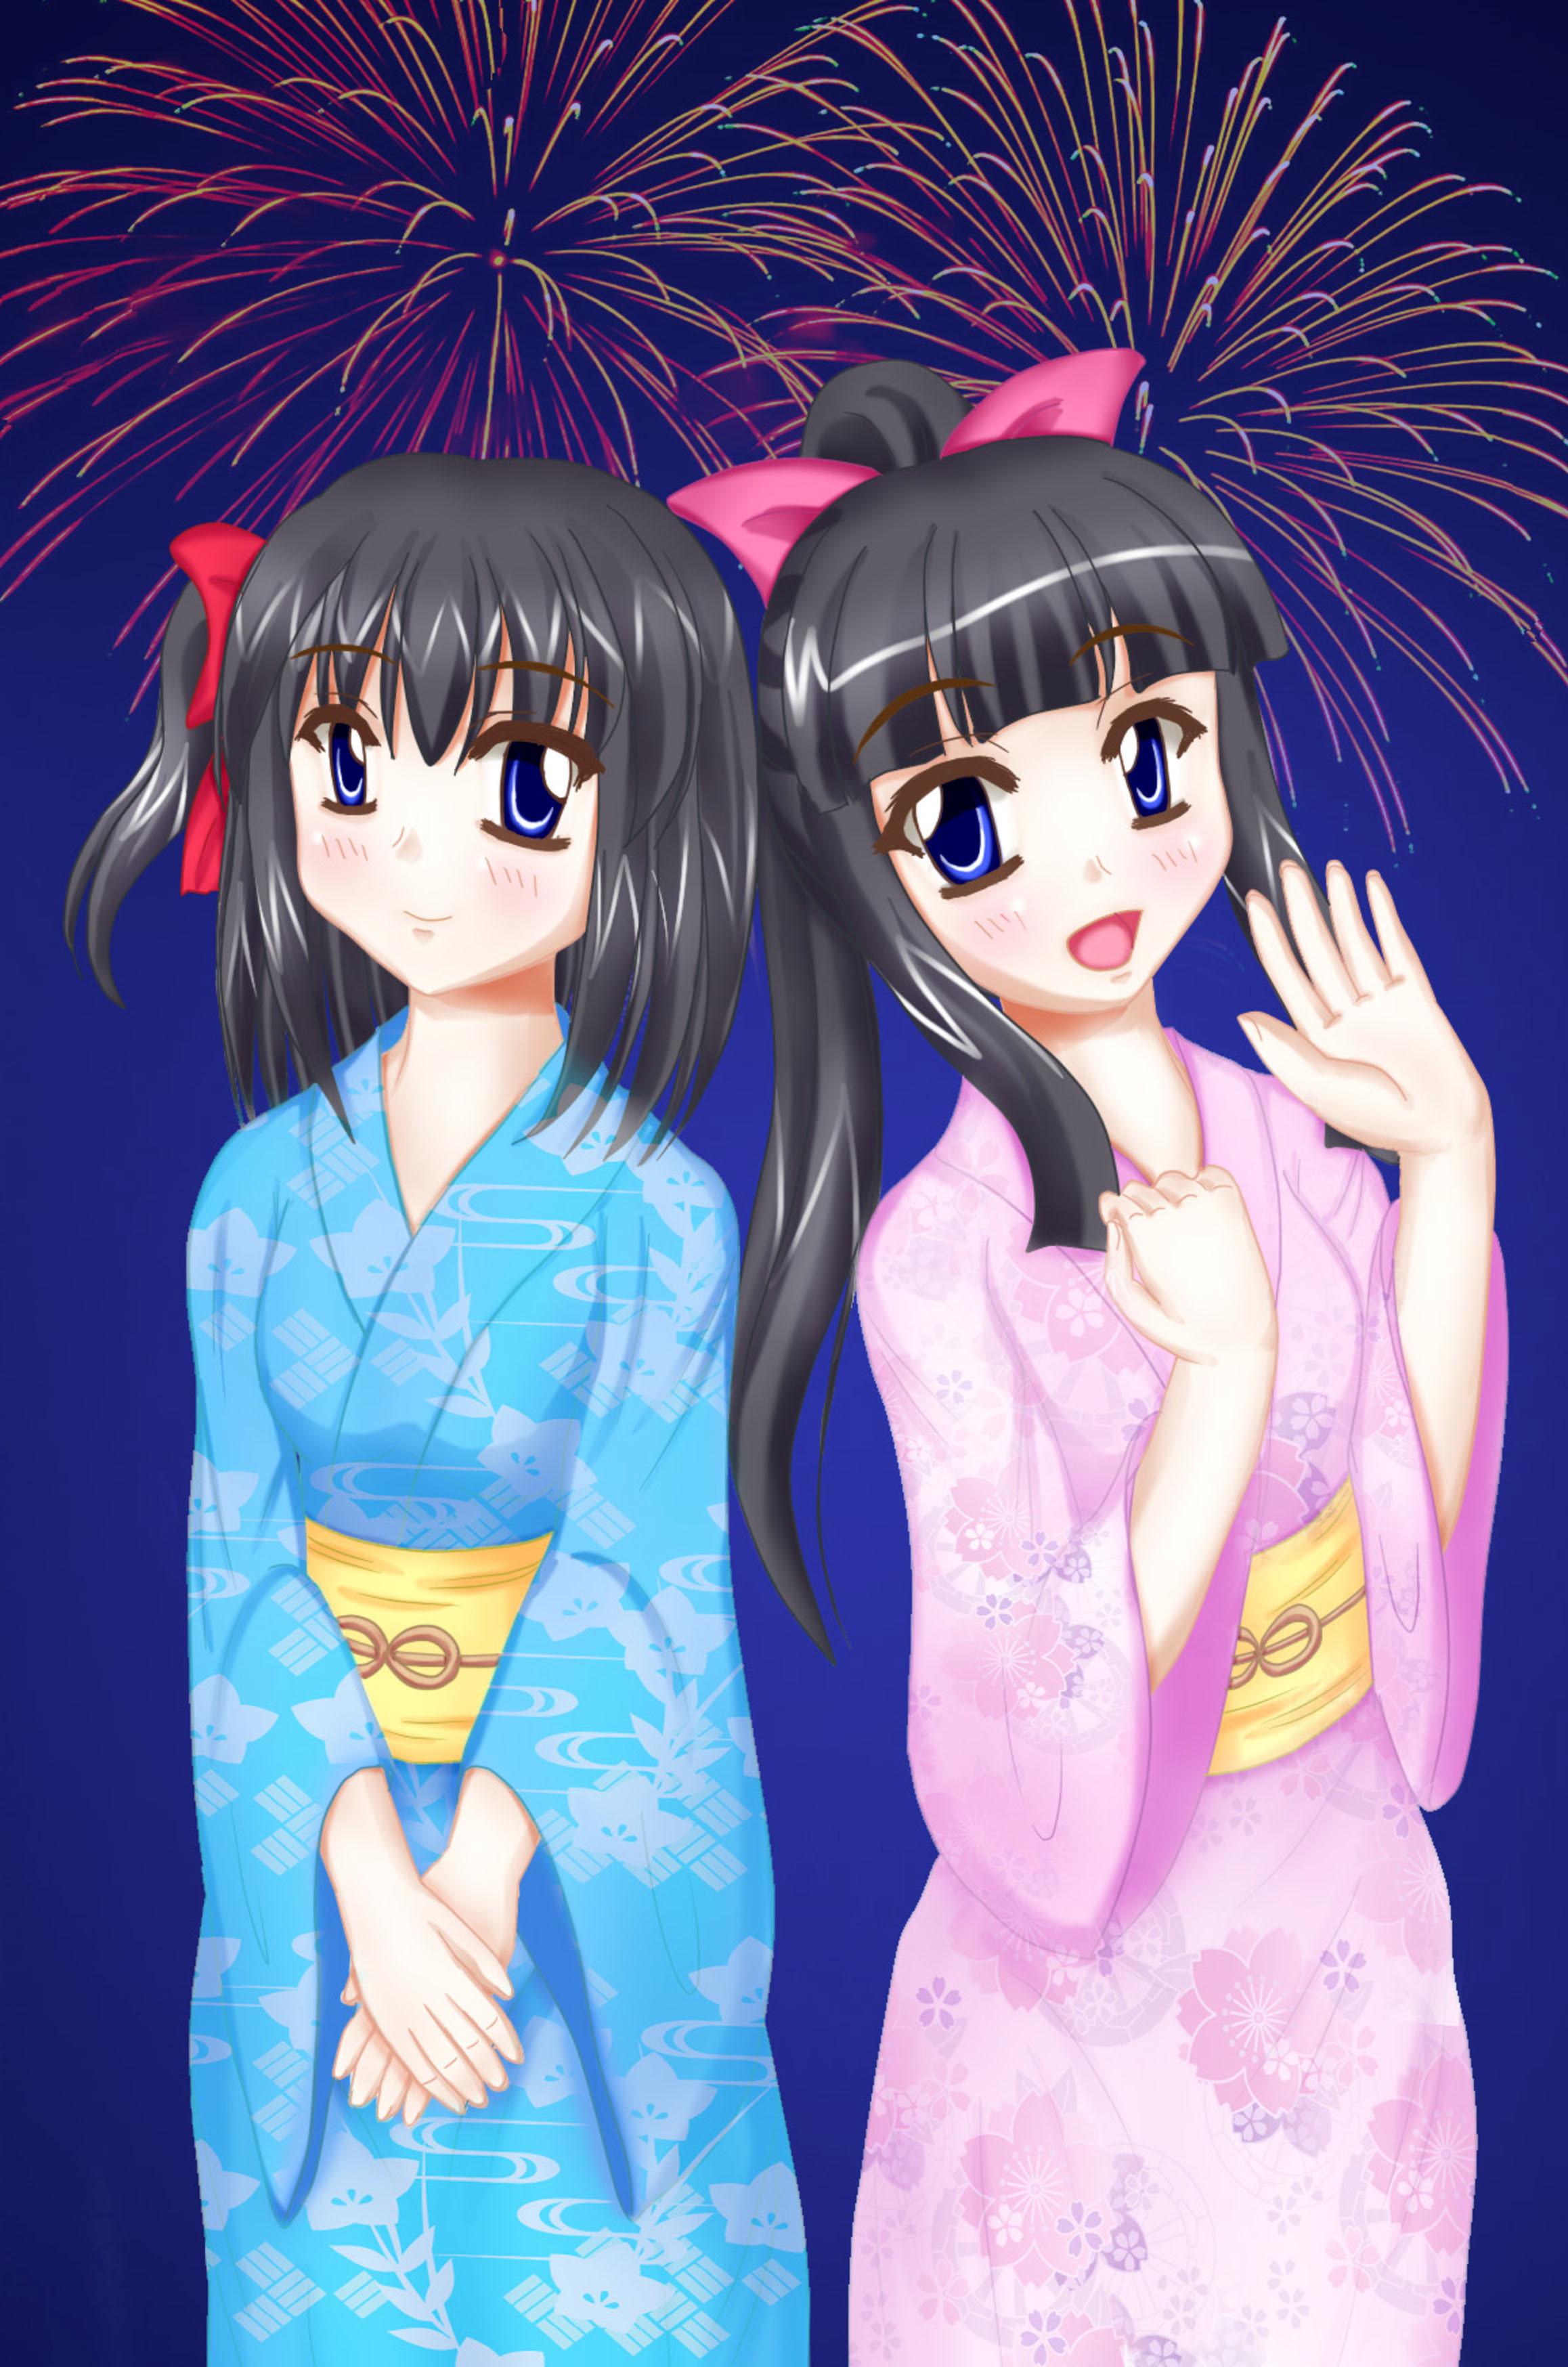 Download wallpaper 2316x3496 girls, friends, kimono, anime hd background